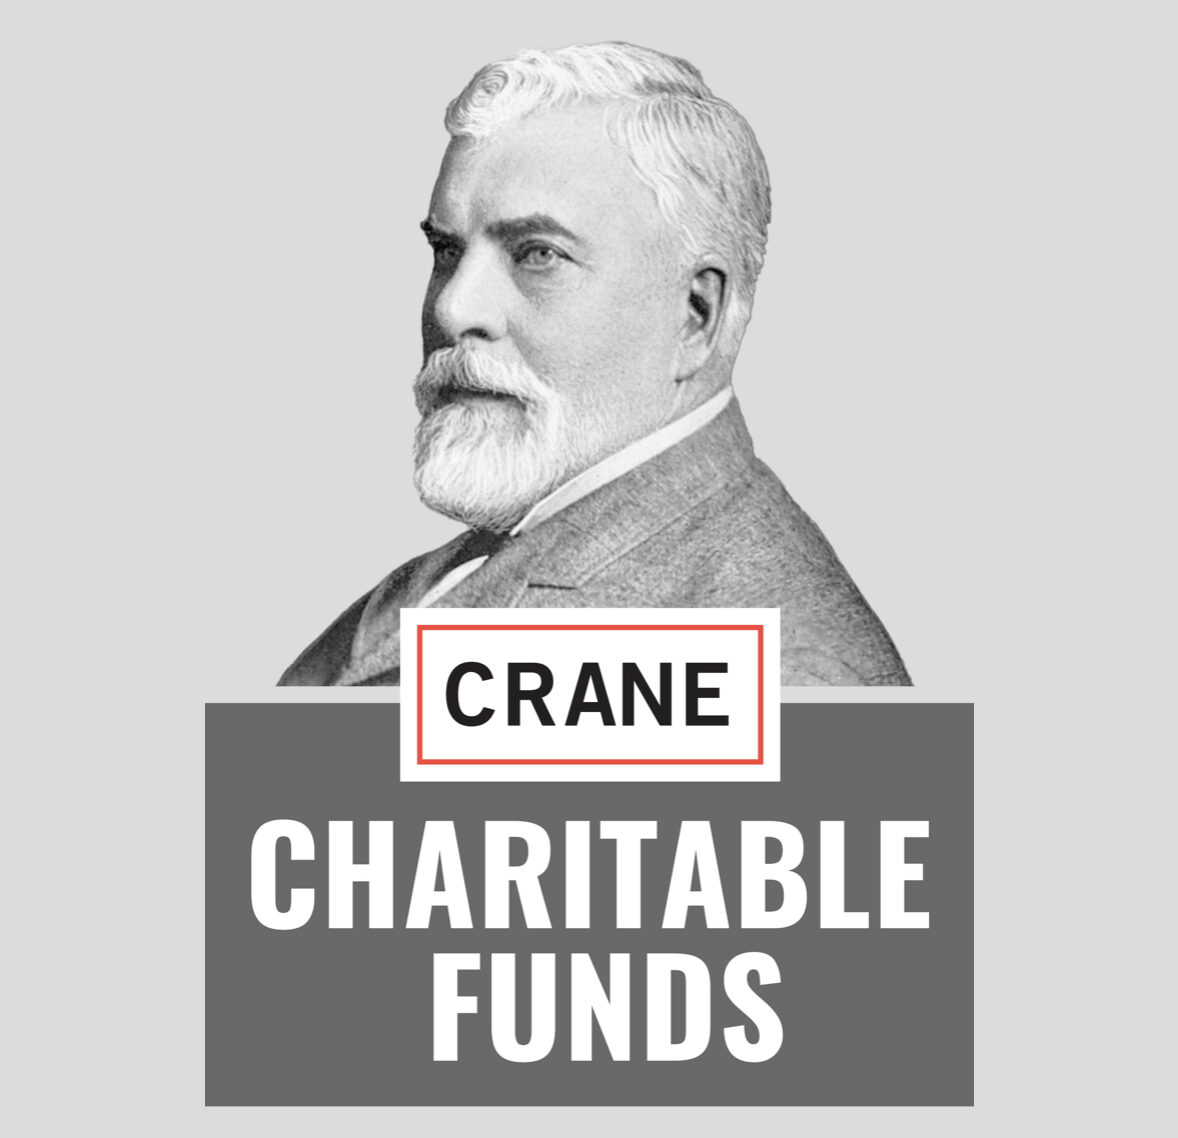 Crane Charitable funds